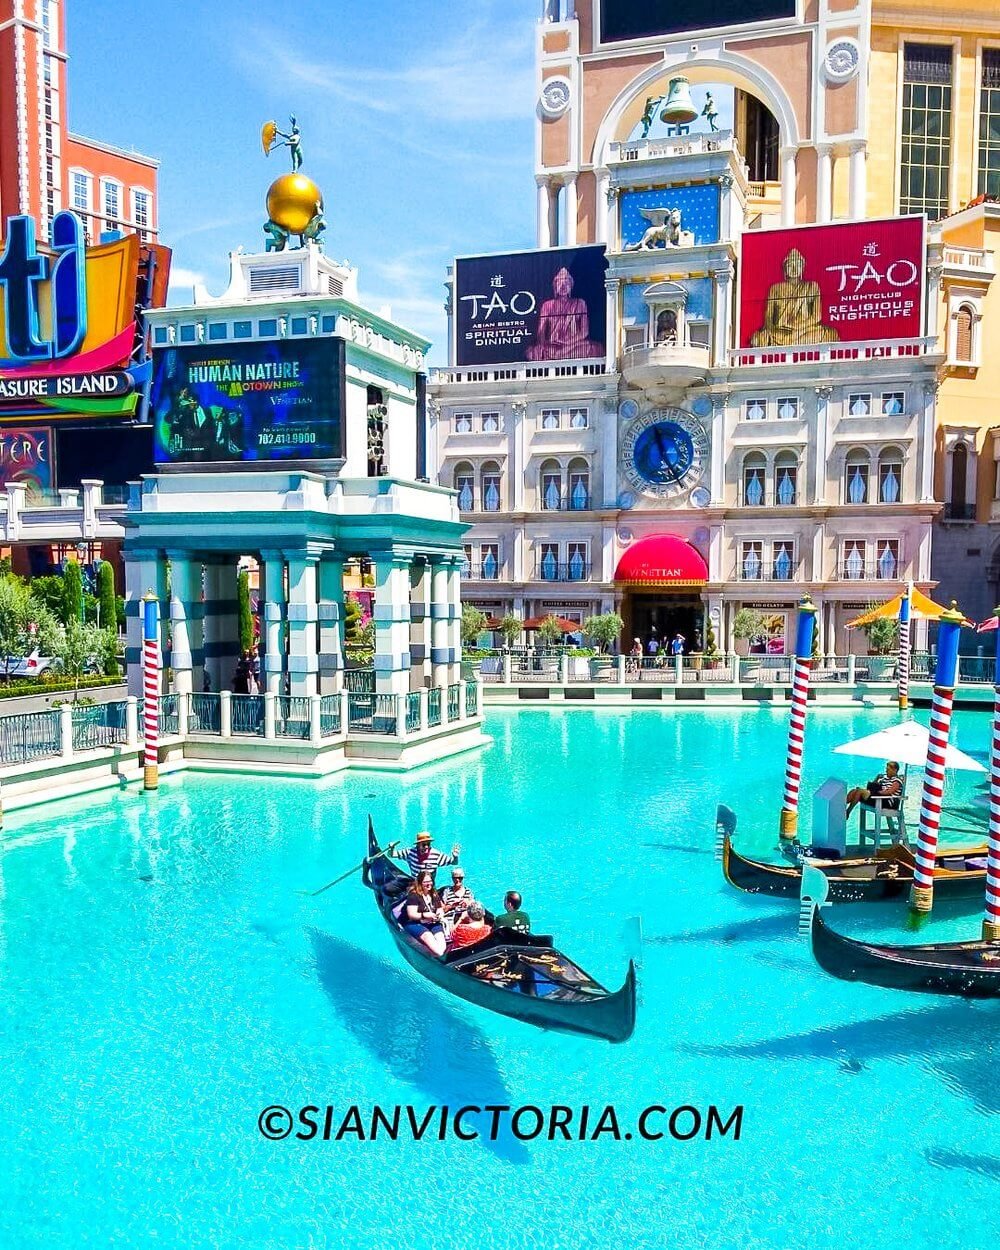 Sian-Victoria-The-Venetian-resort-hotel-las-vegas-nevada-italian-themed-gondola-ride-sightseeing-tourist-attraction-america-usa+(3).jpg